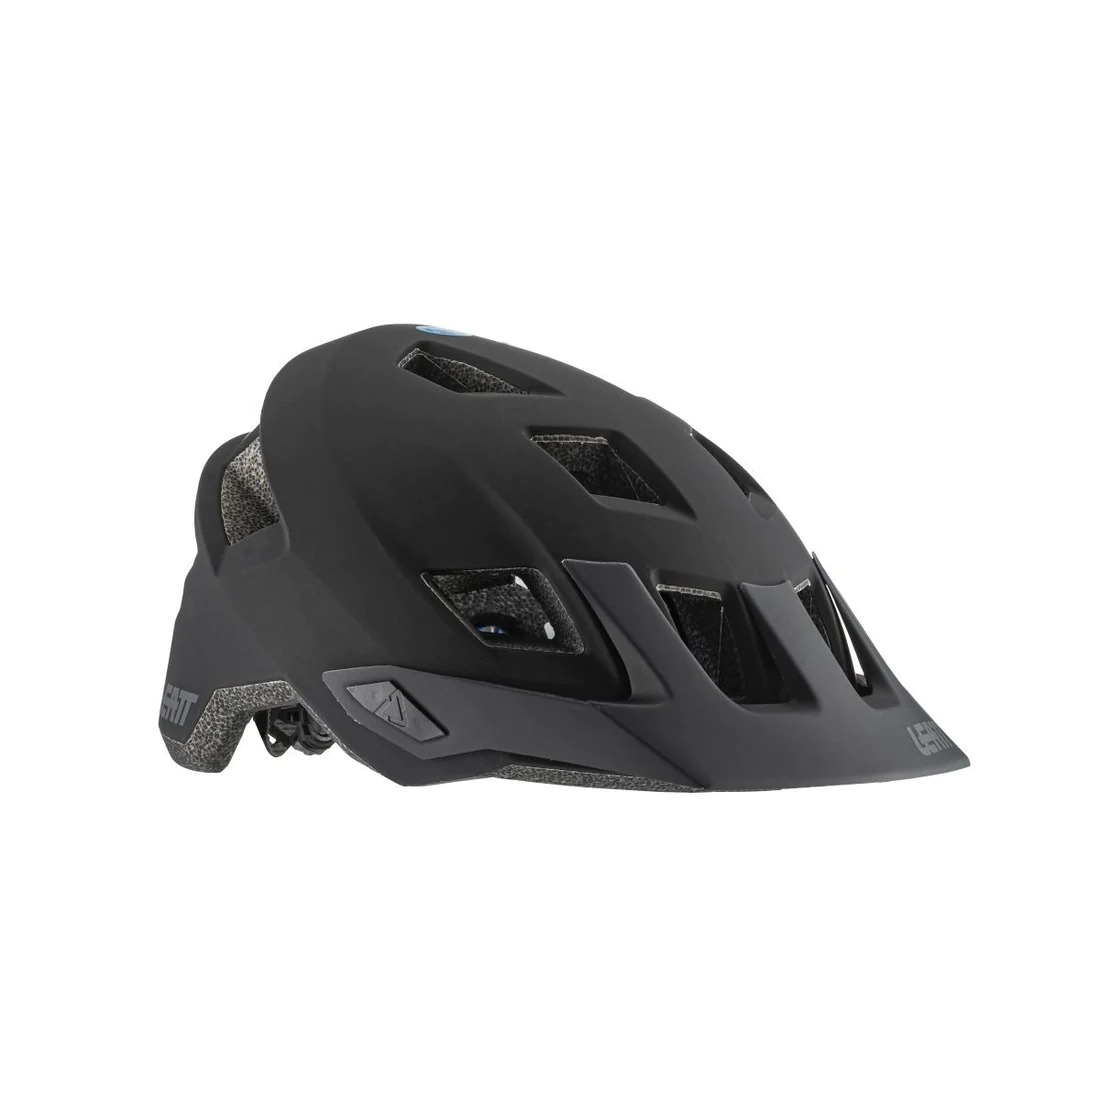 Leatt Protection Helmet MTB 1.0 All Mountain - The Inside Line 